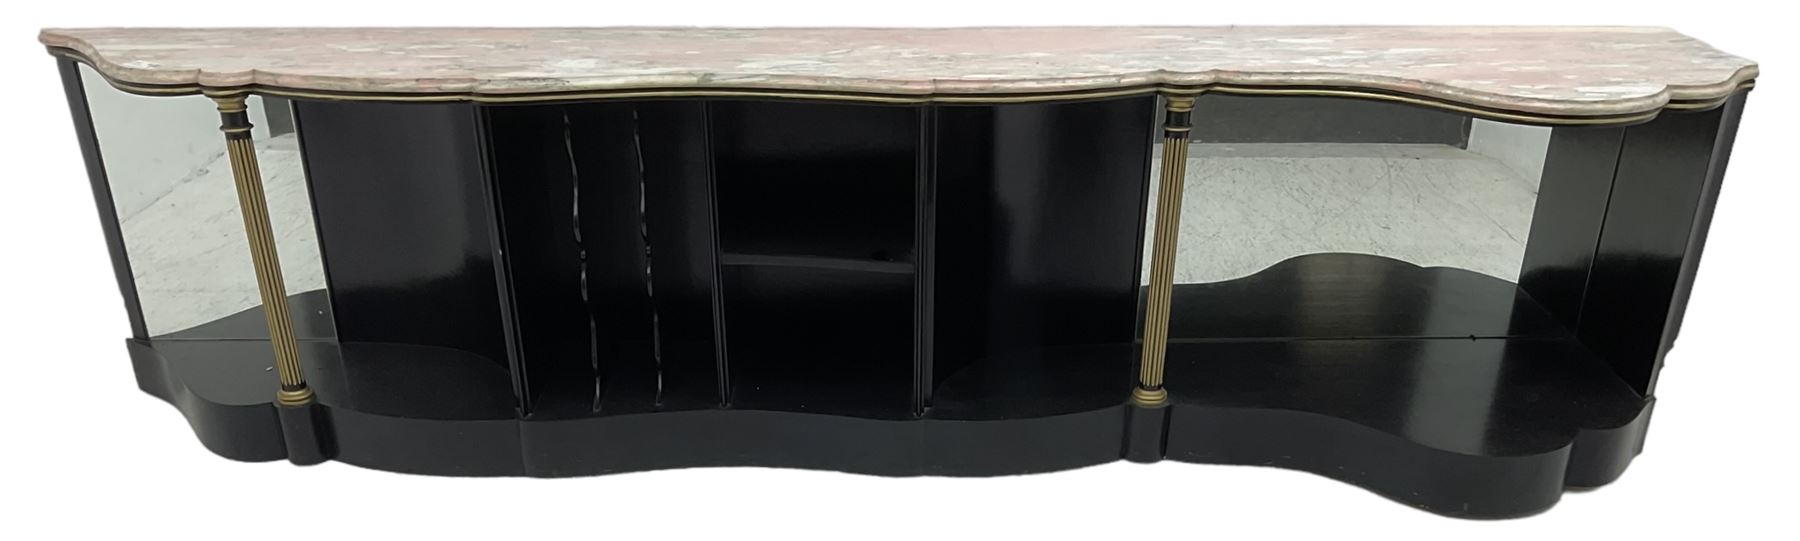 Italian ebonised and gilt serpentine corner console bookcase cabinet - Image 7 of 8